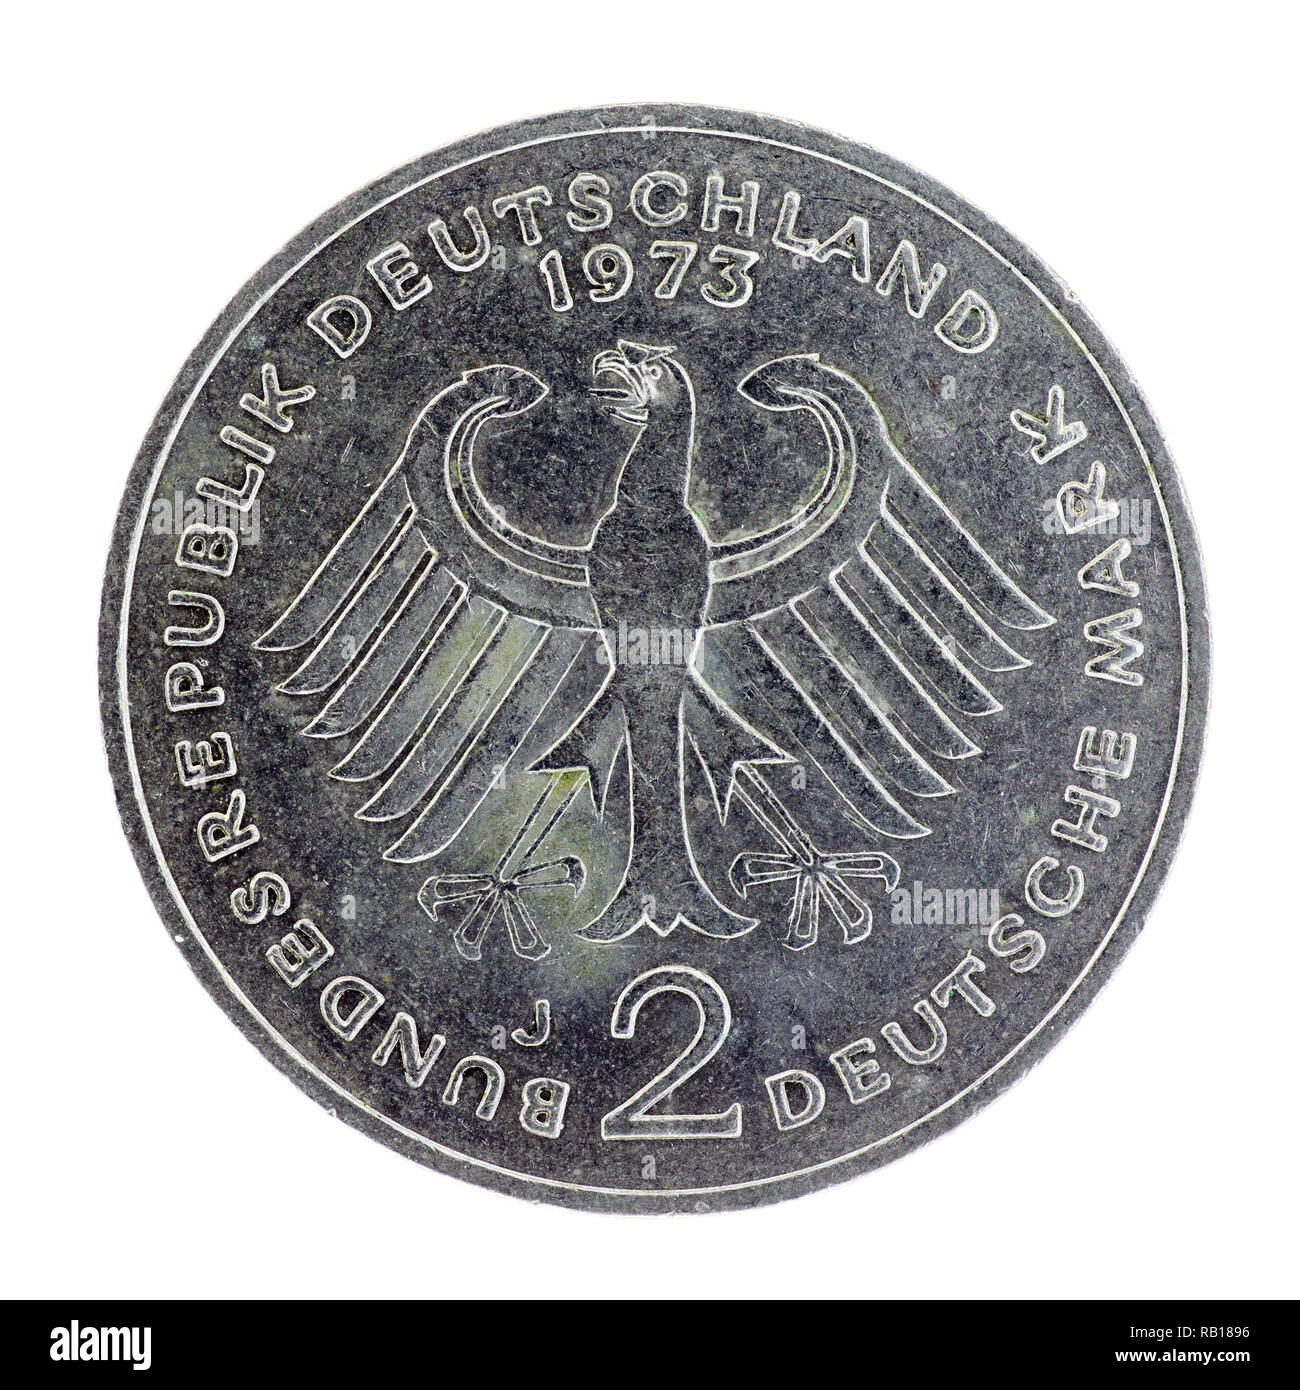 Il tedesco pre-Euro 2 marco tedesco moneta datata 1973 Foto Stock